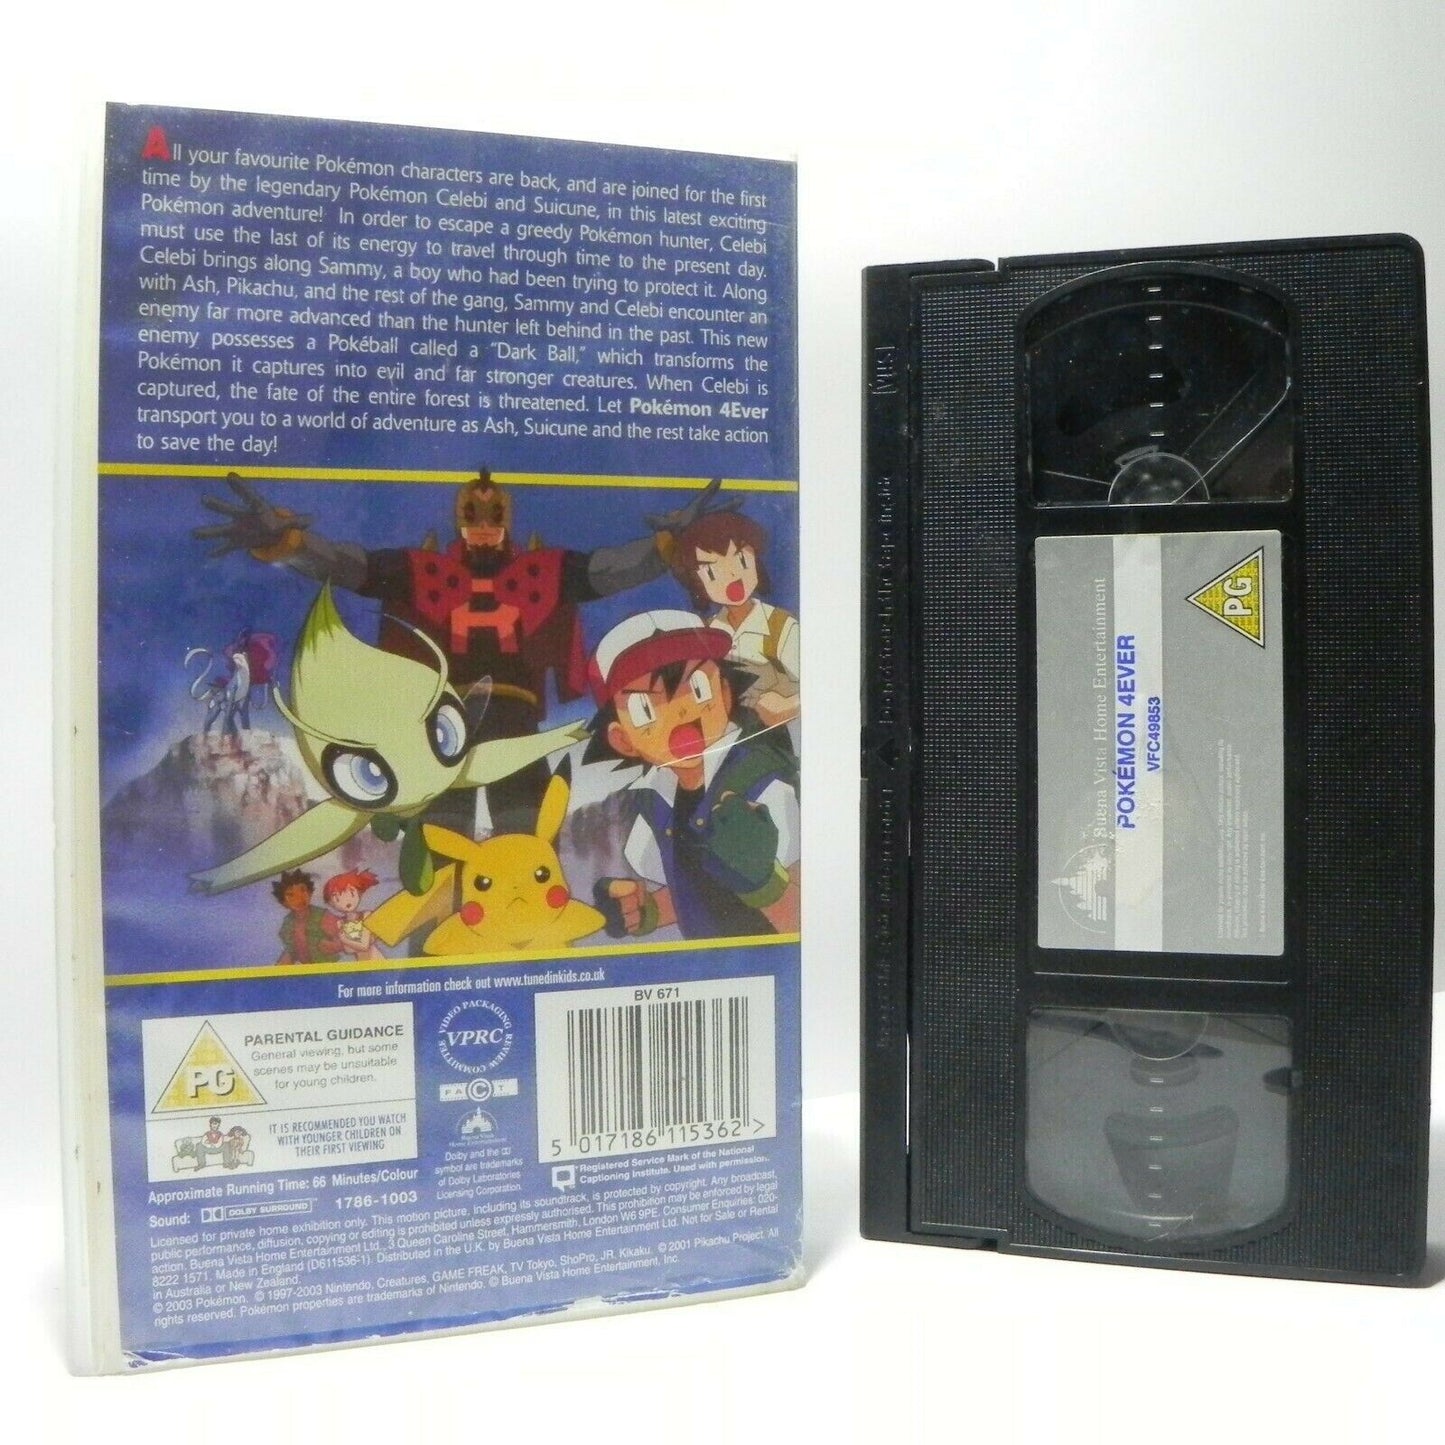 Pokemon 4Ever - Animated - Action Adventures - Full Movie - Children's - Pal VHS-